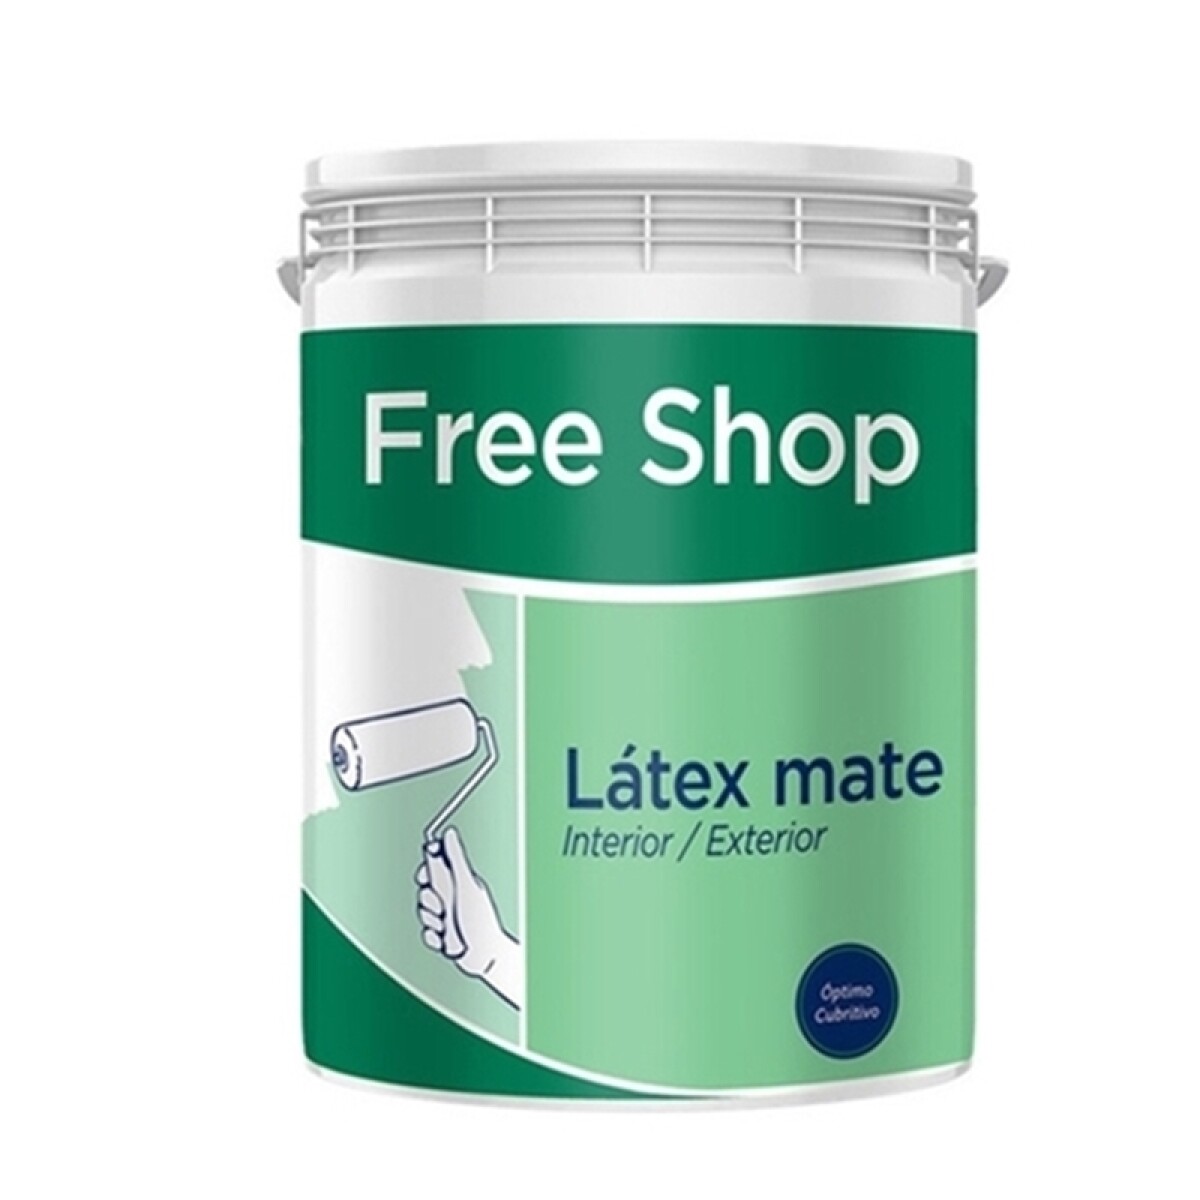 FREE SHOP LATEX MATE 4Lts. - INTERIOR/ EXTERIOR 